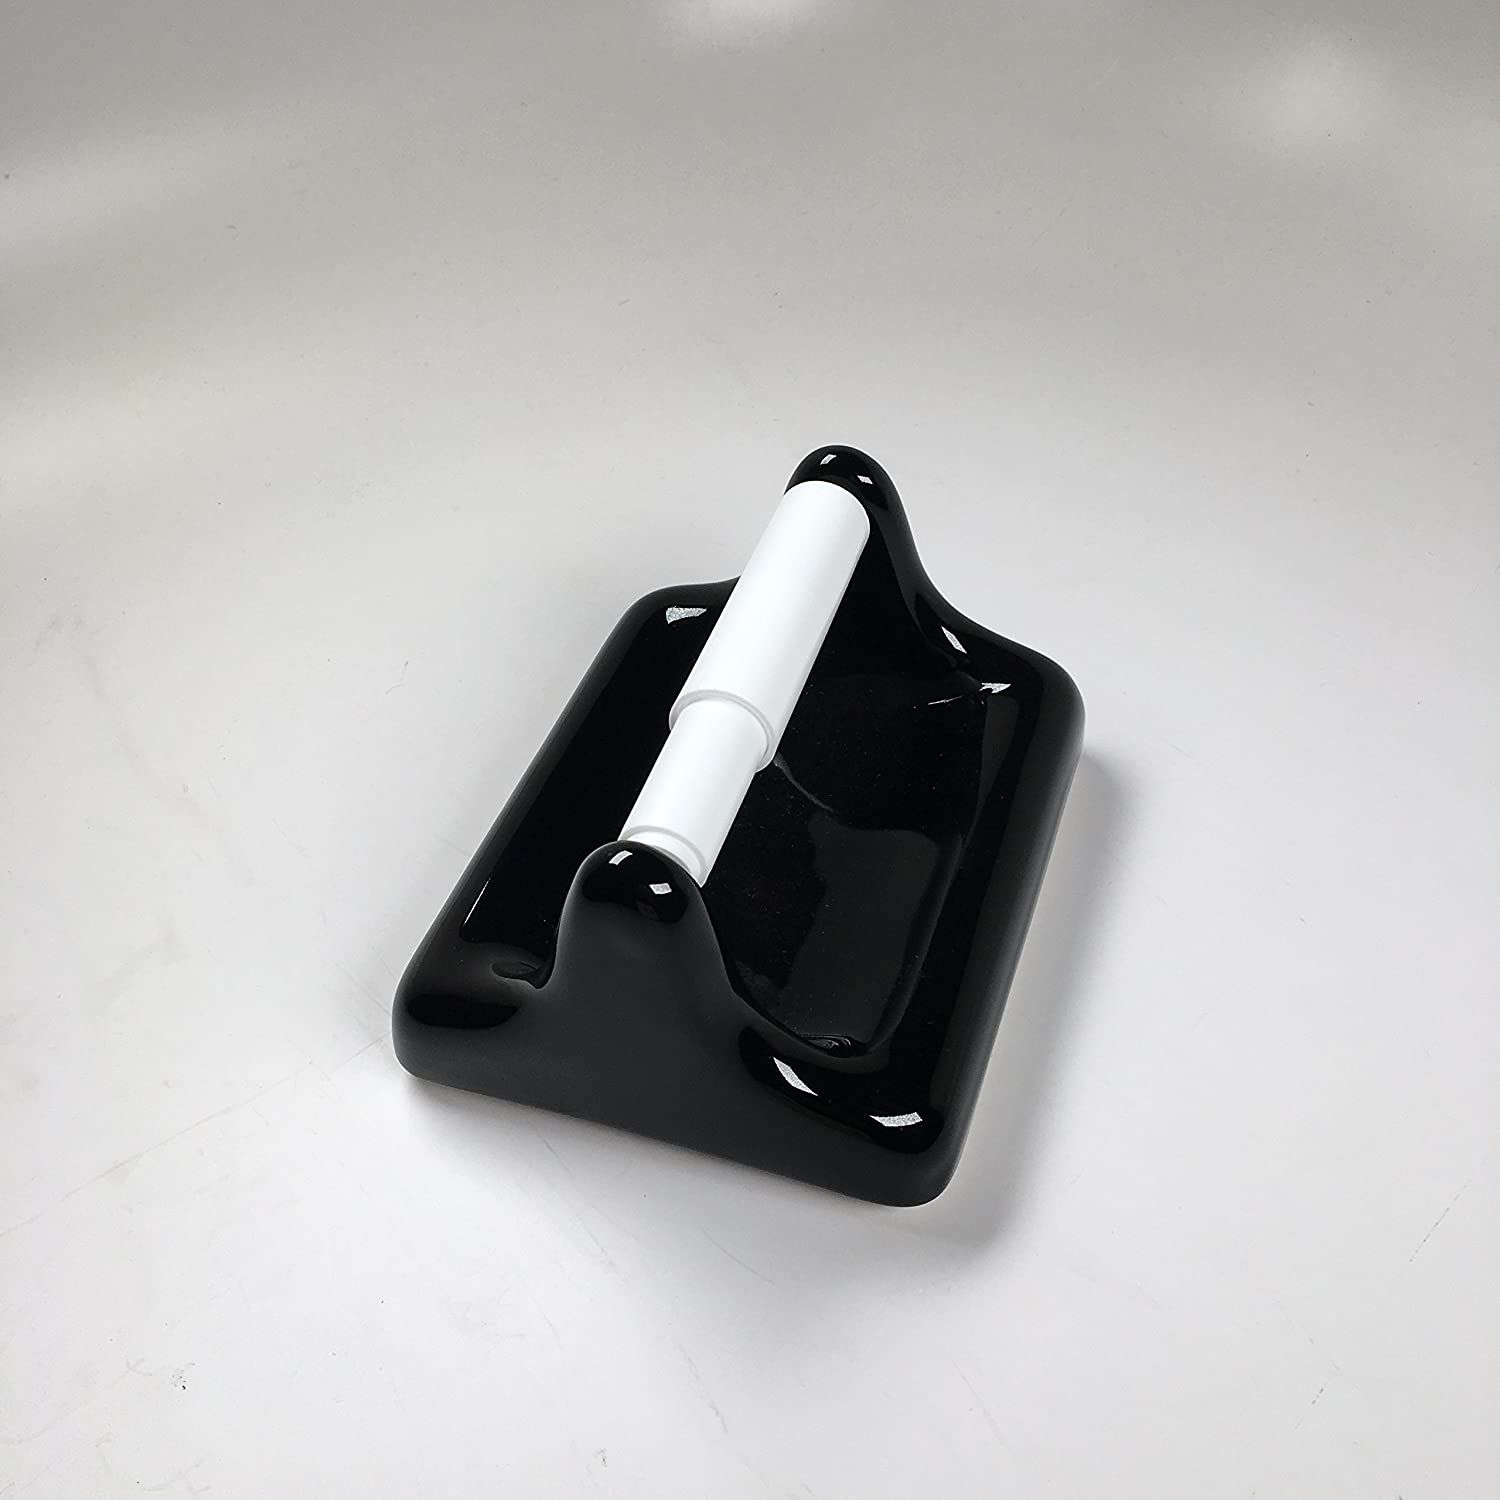 Bathroom Shower Wall Accessory Kit Black Shinny Ceramic (5 Pieces)